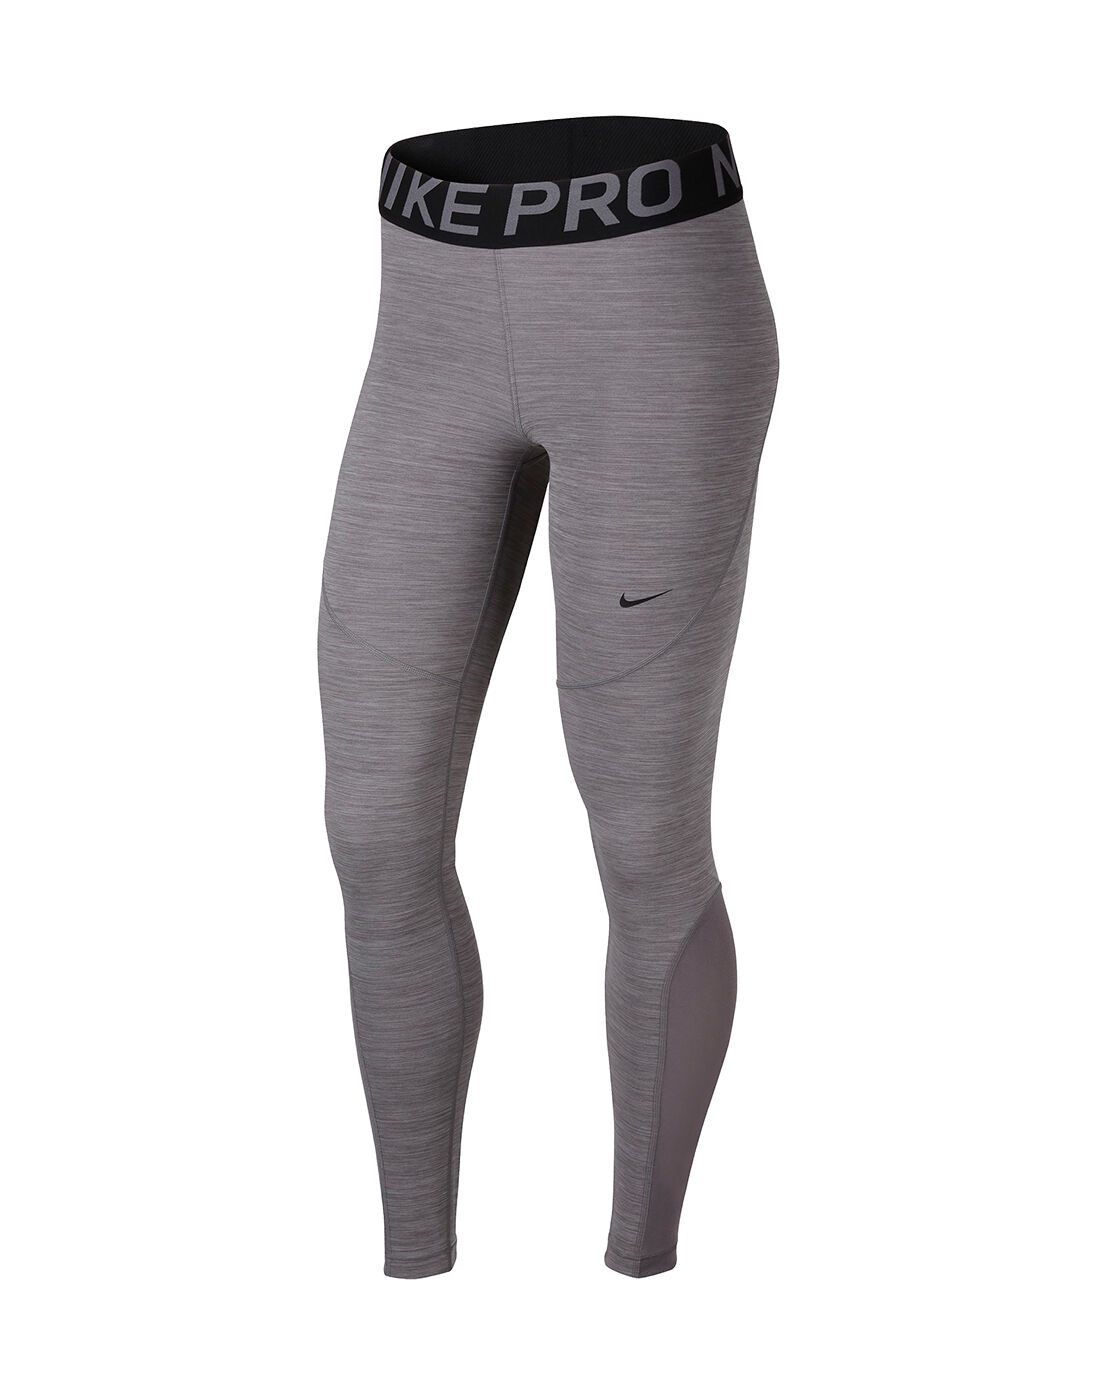 nike pro leggings grey and black